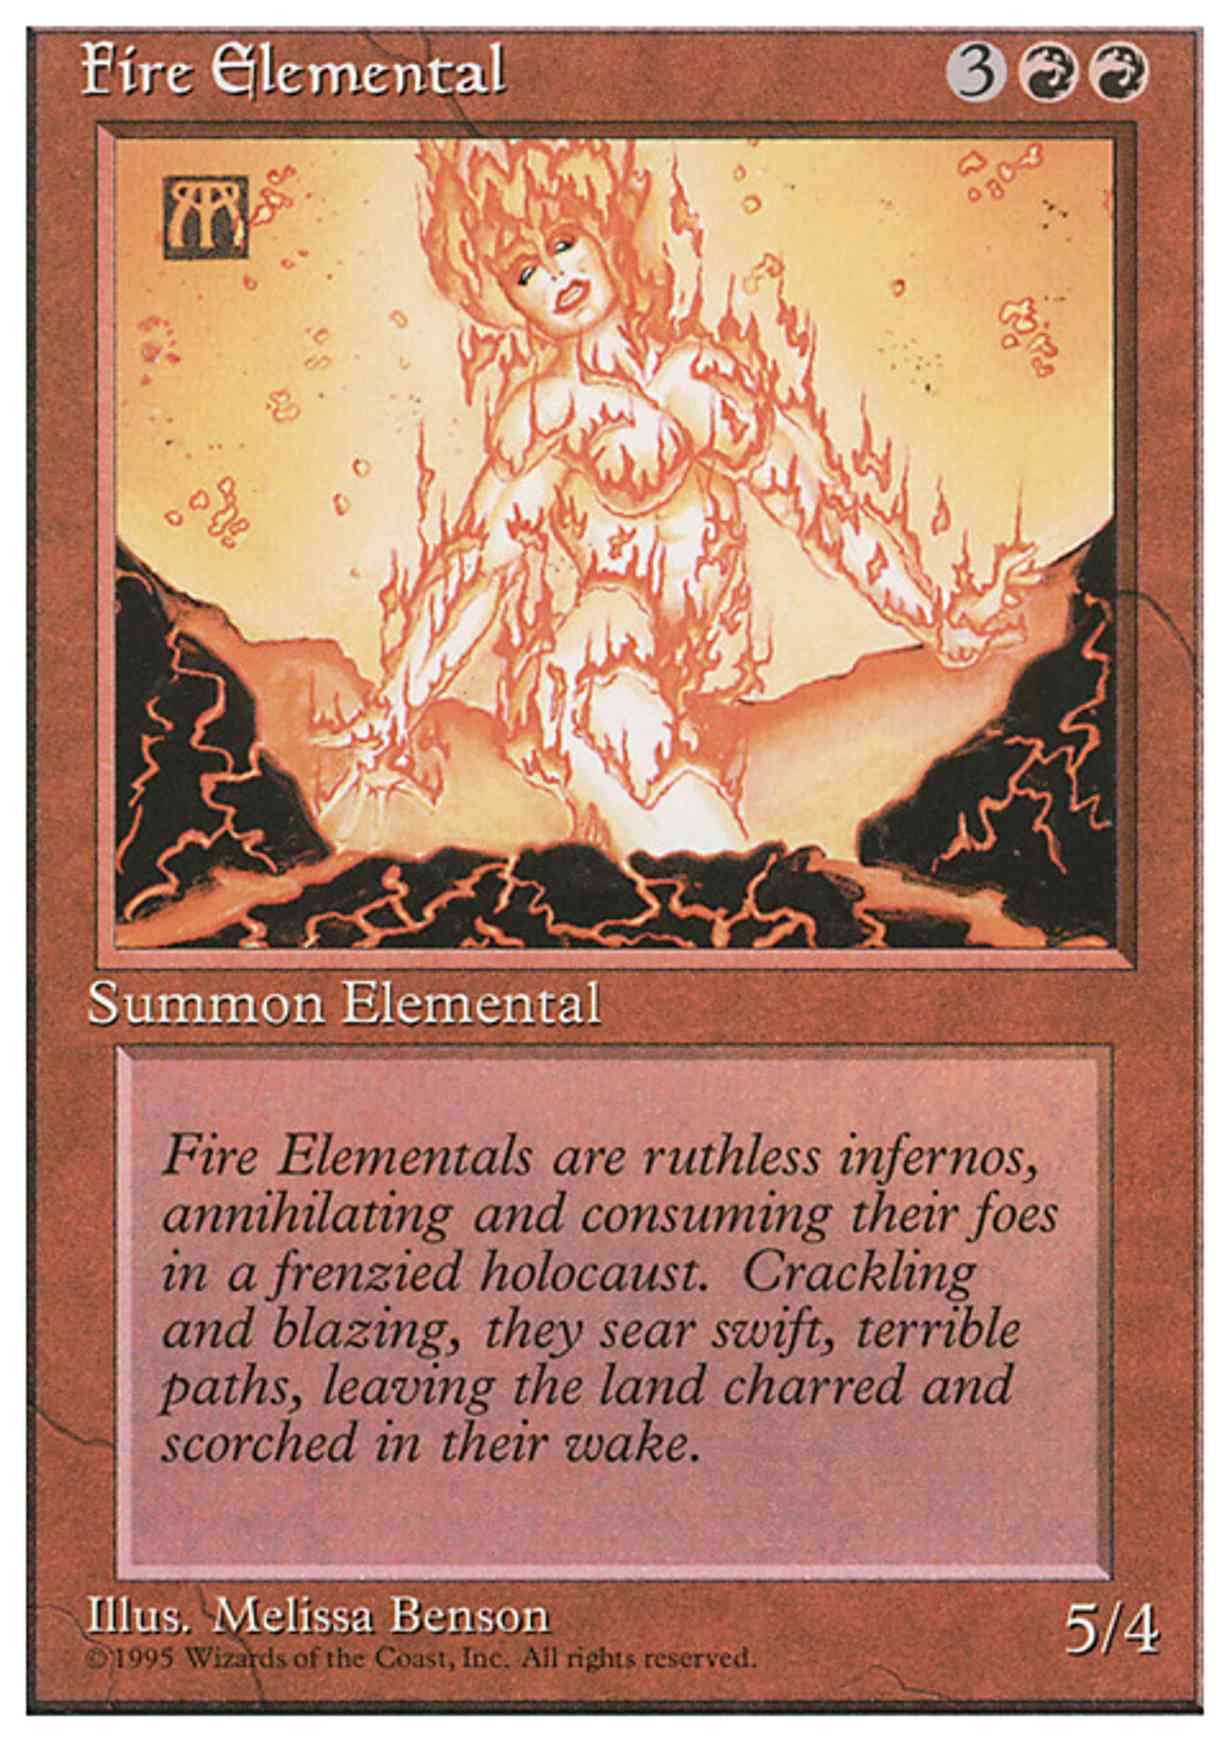 Fire Elemental magic card front